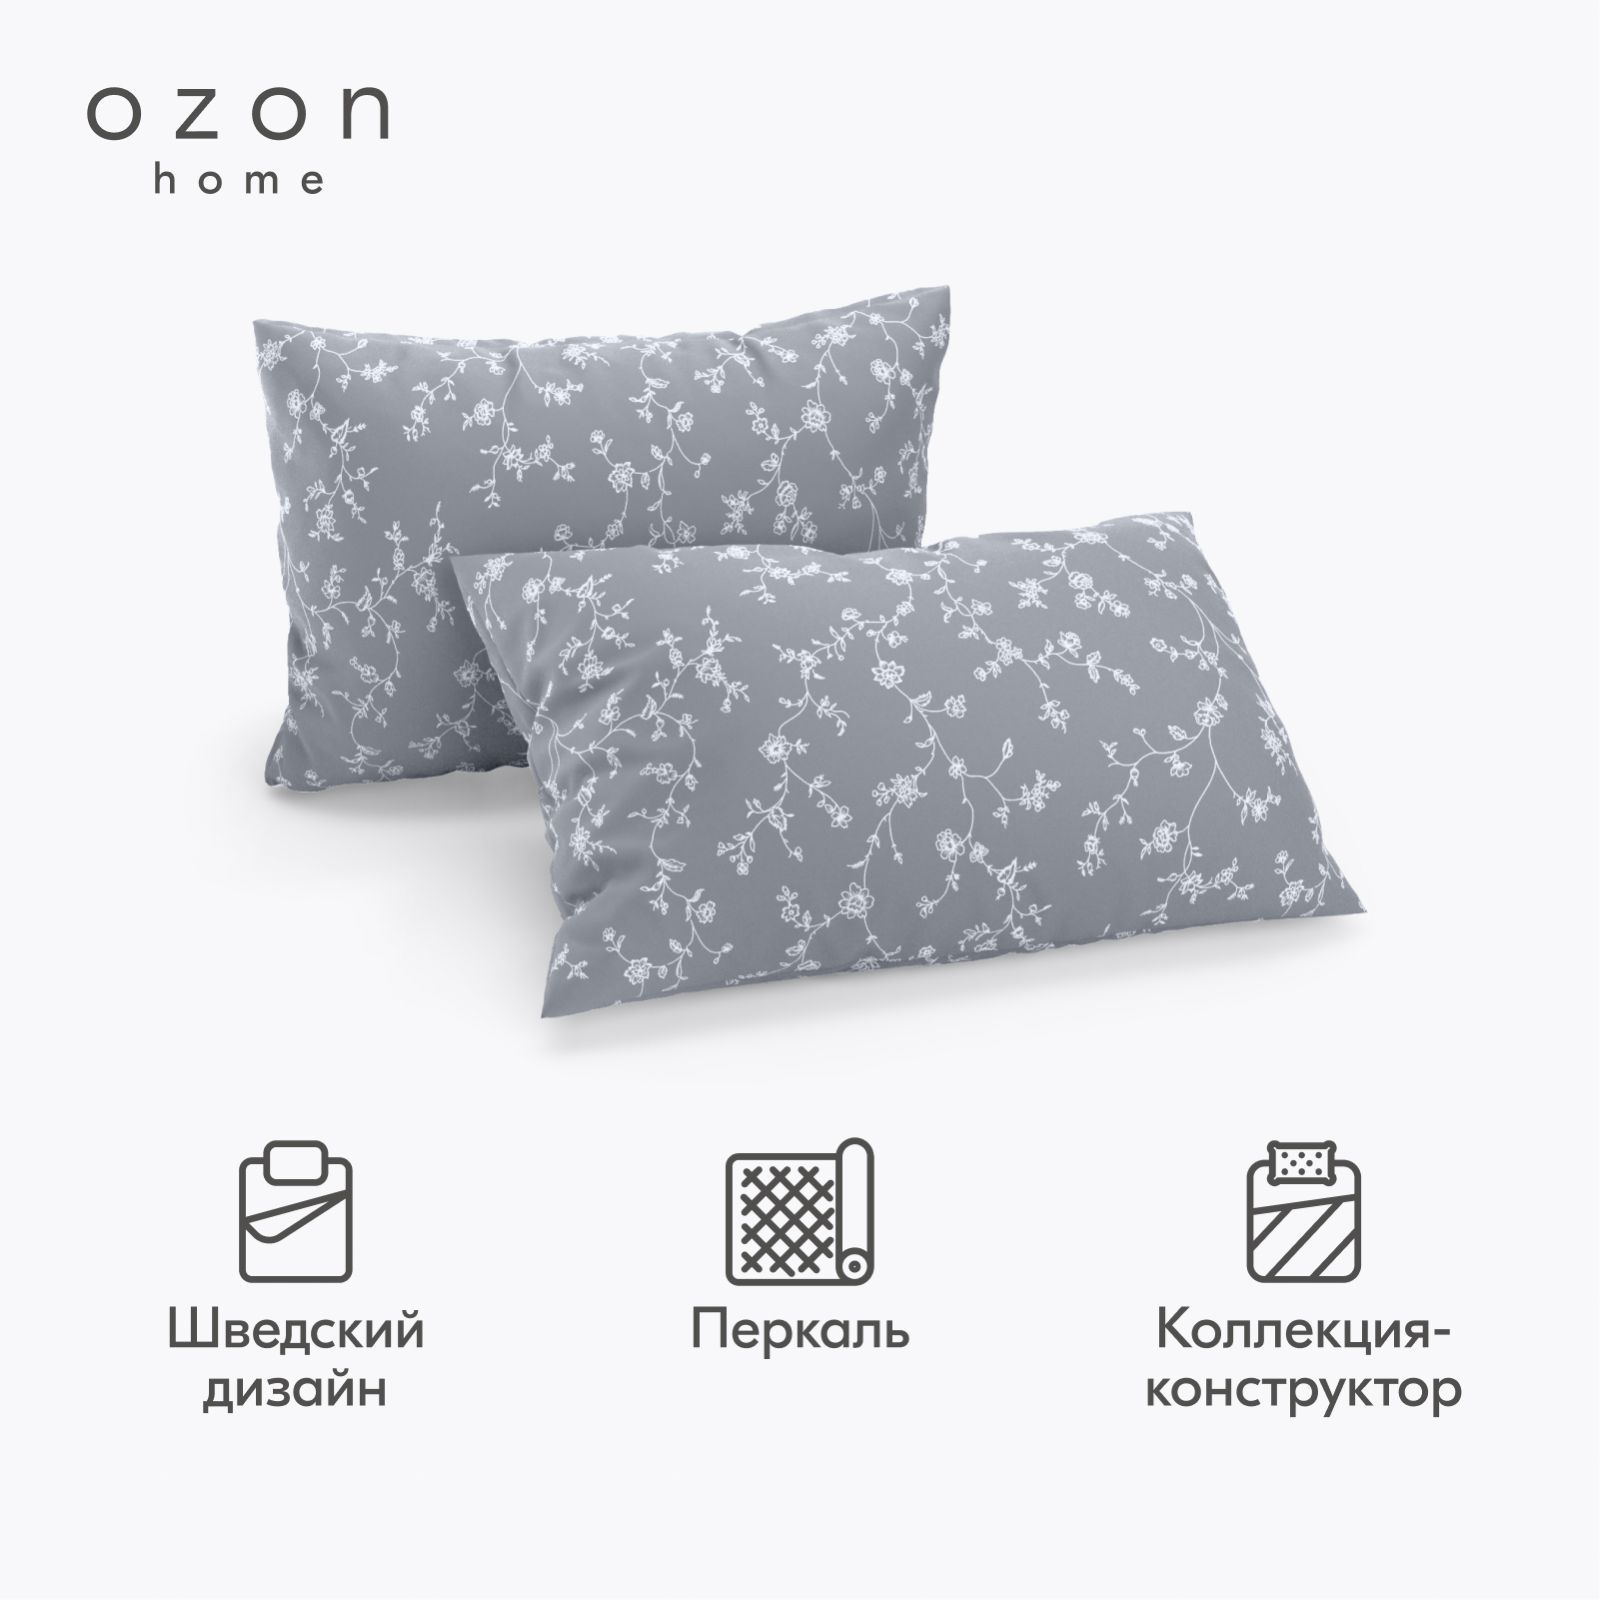 Наволочки озон 70 70. Пейсли наволочки OZON Home бежевый. Озон наволочки на декоративные подушки. Азон наволочки на подушки 30×30 вилюровые.